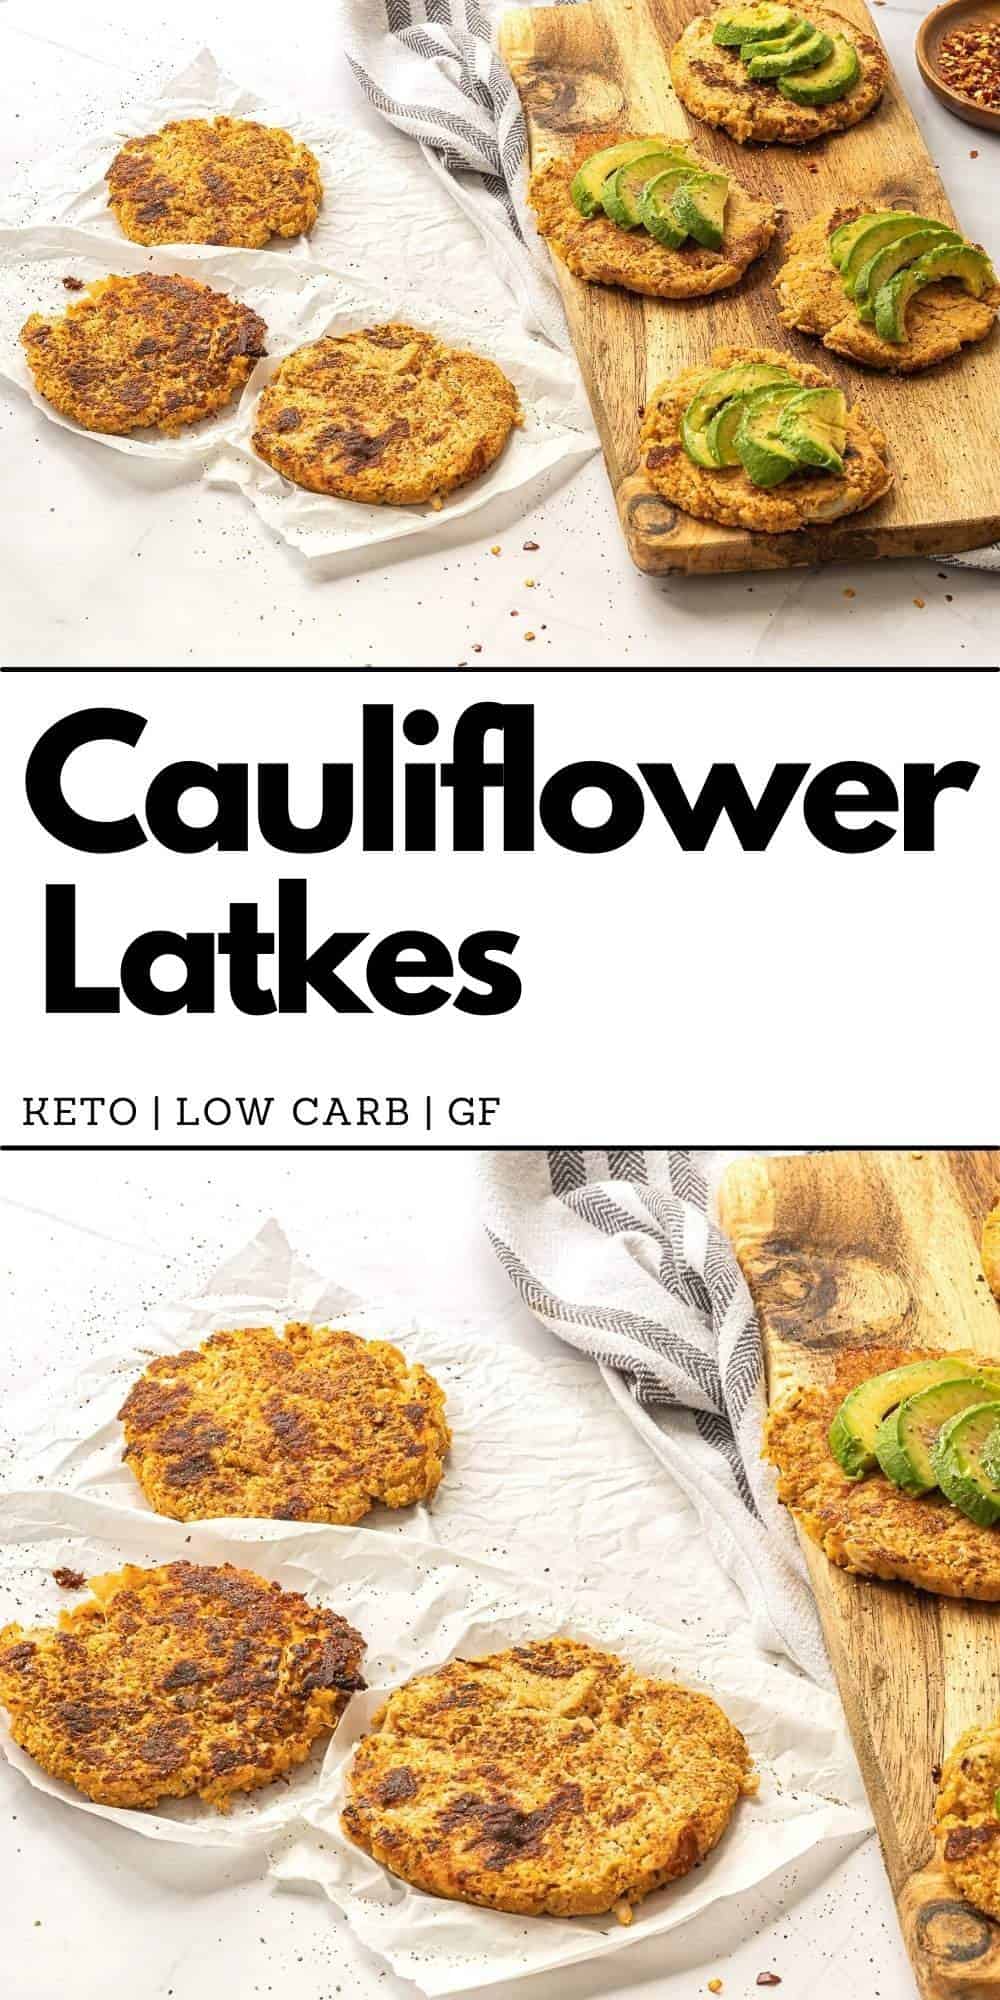  Keto Low Carb Cauliflower Latkes 